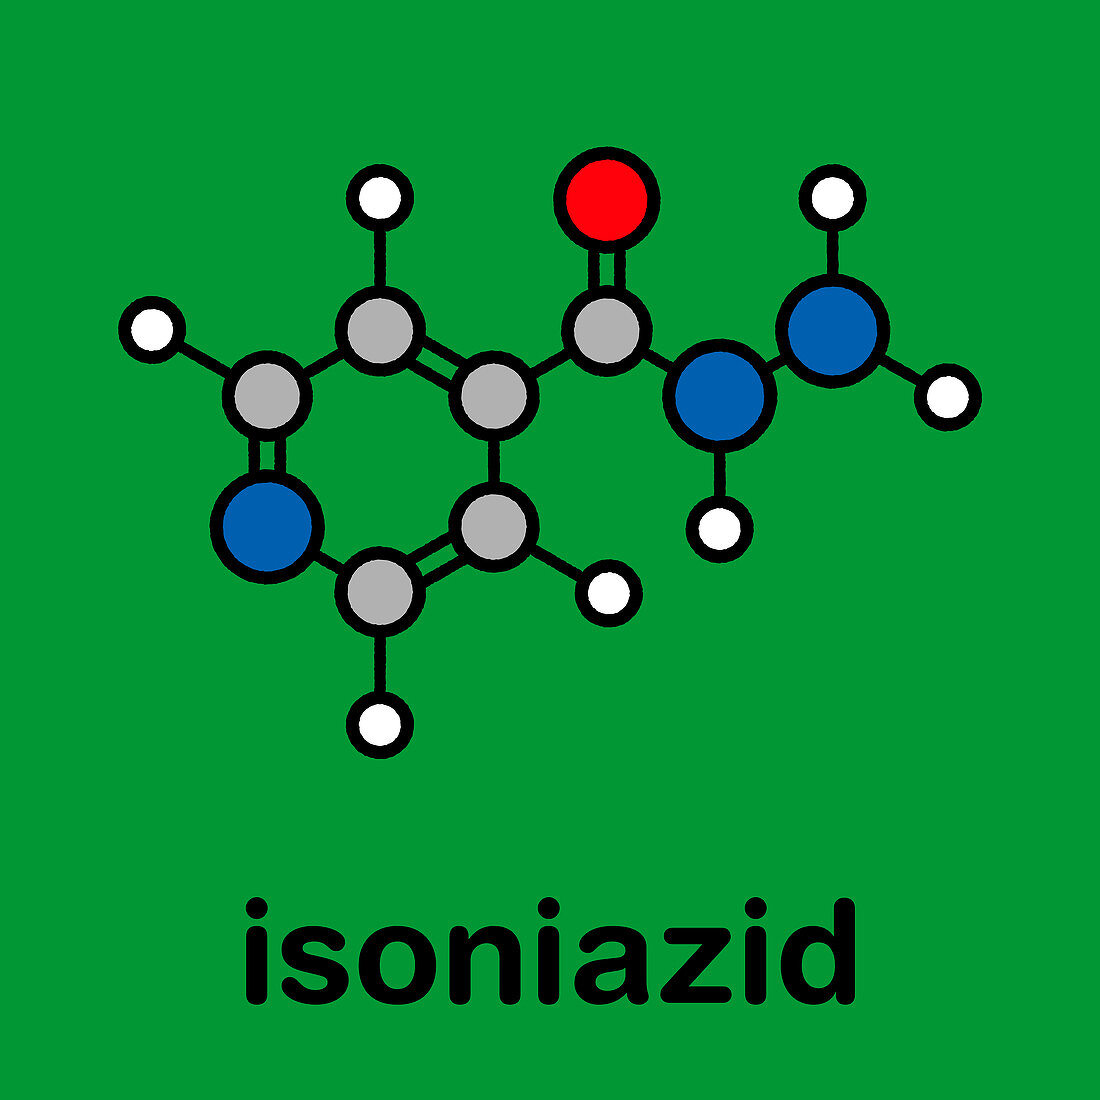 Isoniazid tuberculosis antibiotic drug, molecular model